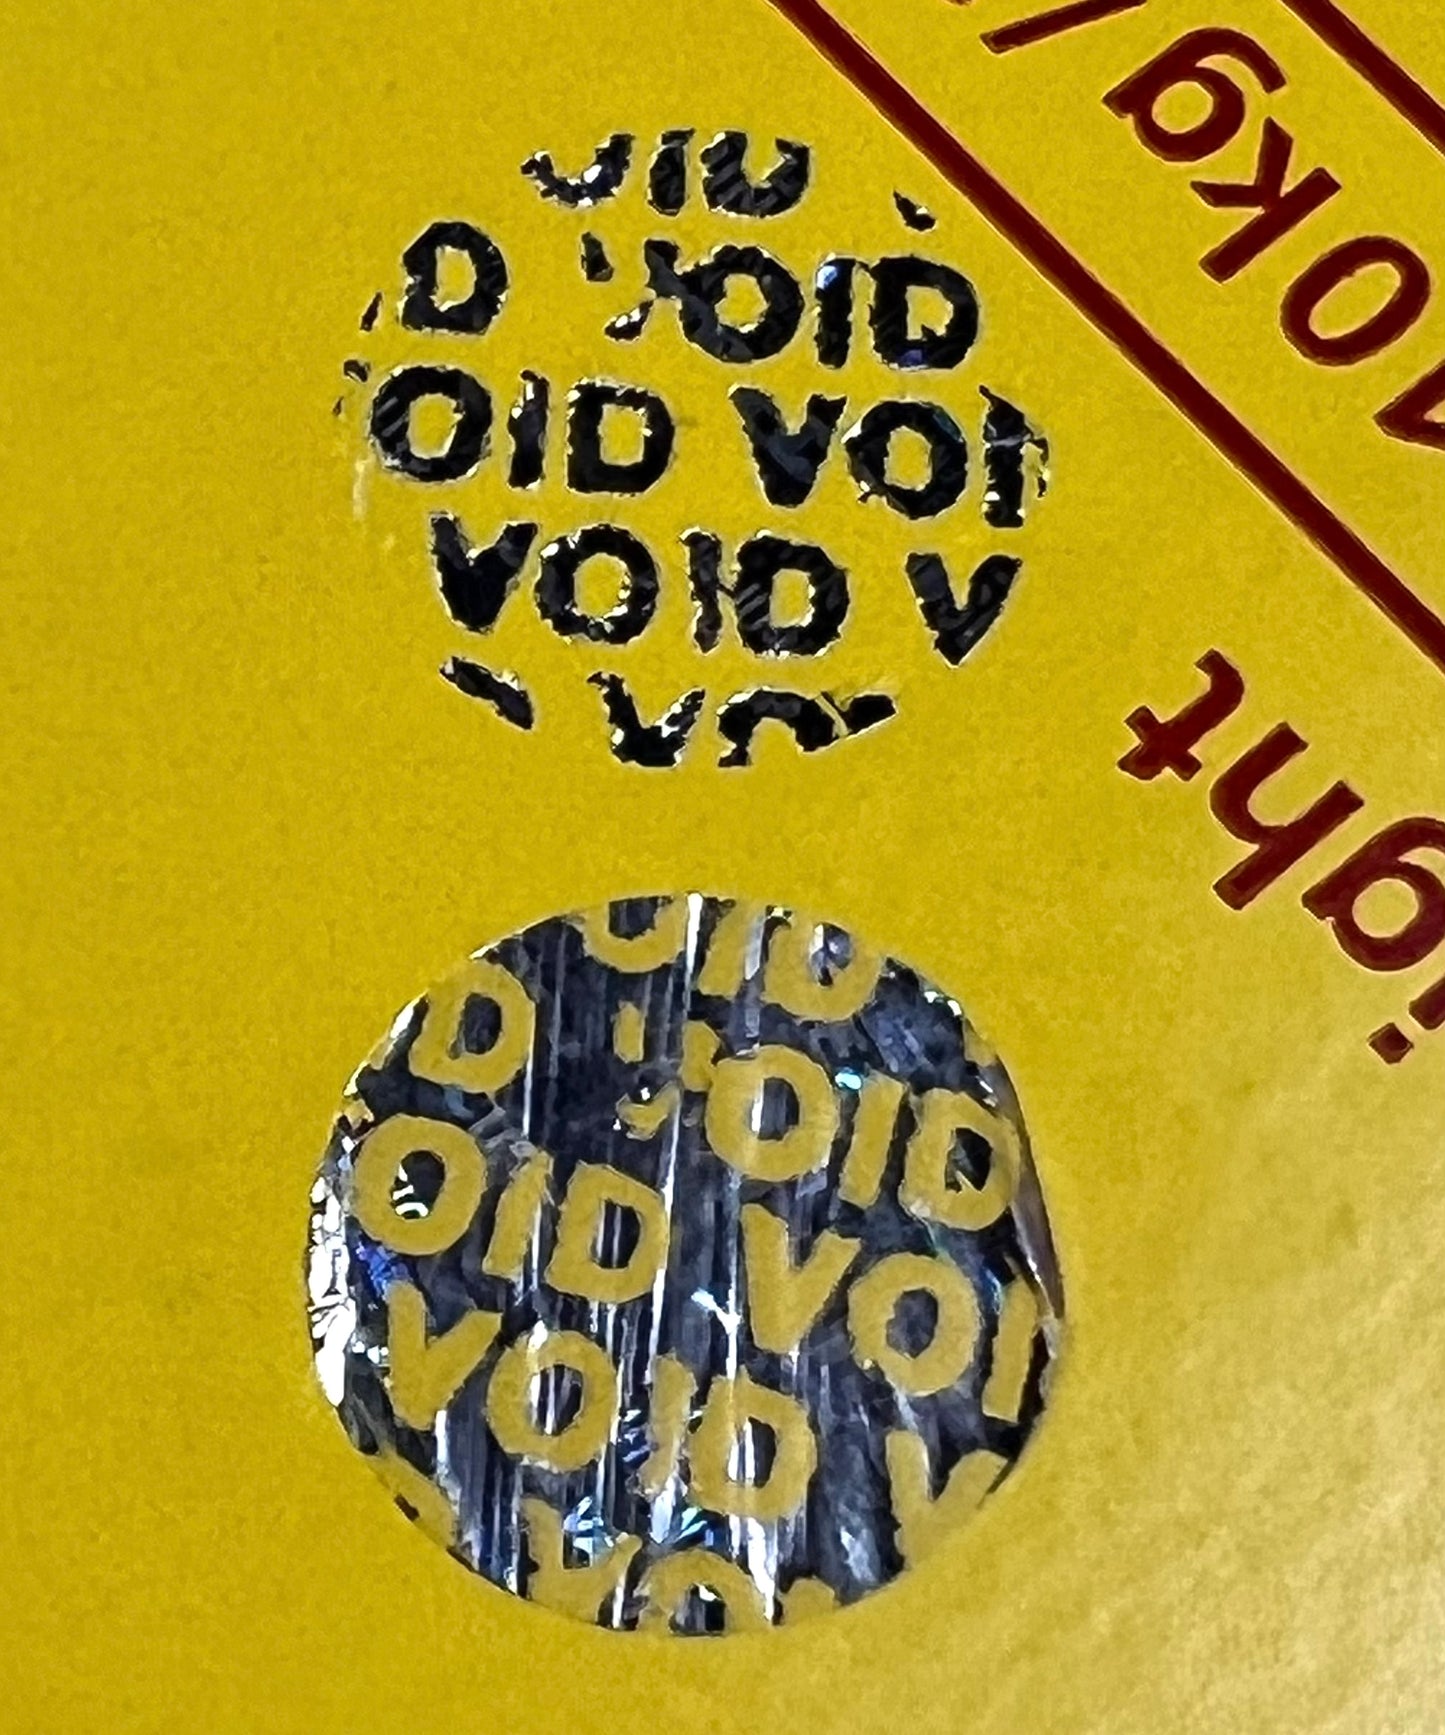 SH1020 "AUTHENTIC" Round Tamper Evident Security Hologram Sticker, Warranty Tamper Proof Holographic Labels